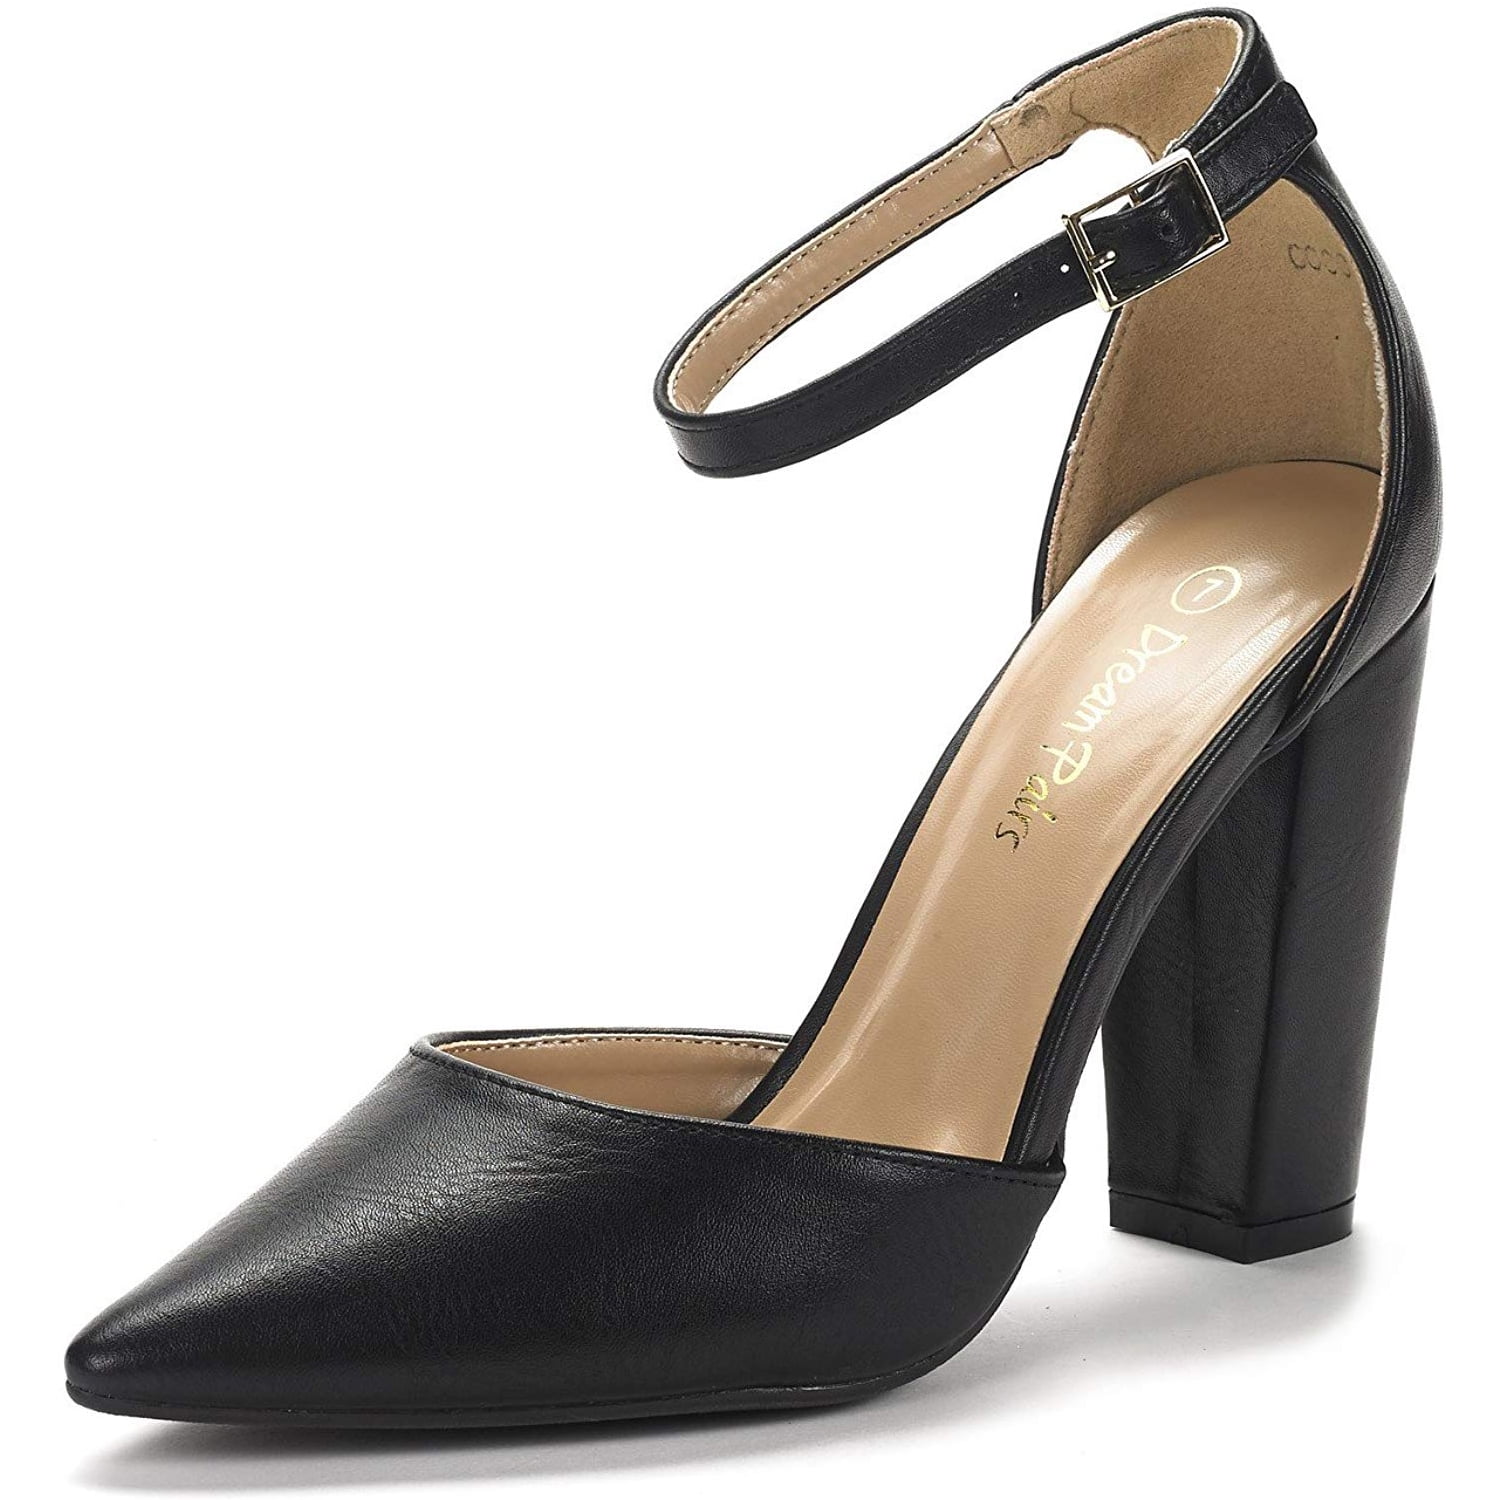 High Stiletto Heel Sandals Pointed Toe Cross Over Strap Platform Pumps Dress Shoes for Women Beige